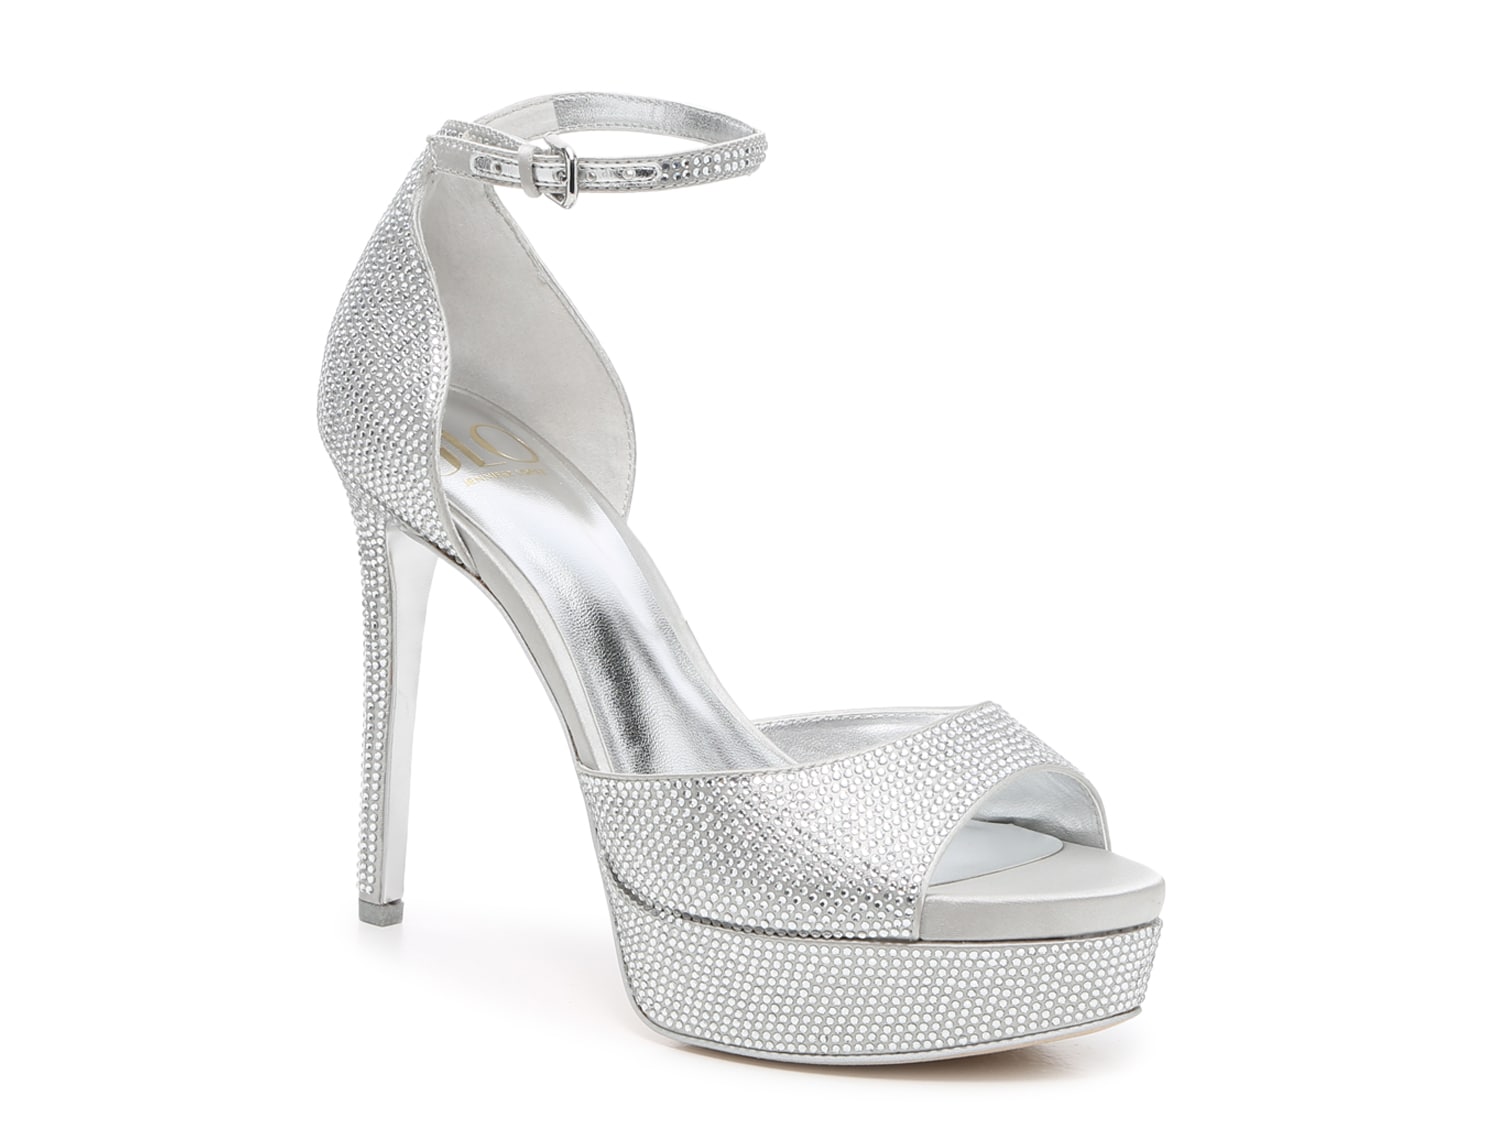 dsw dress shoes silver